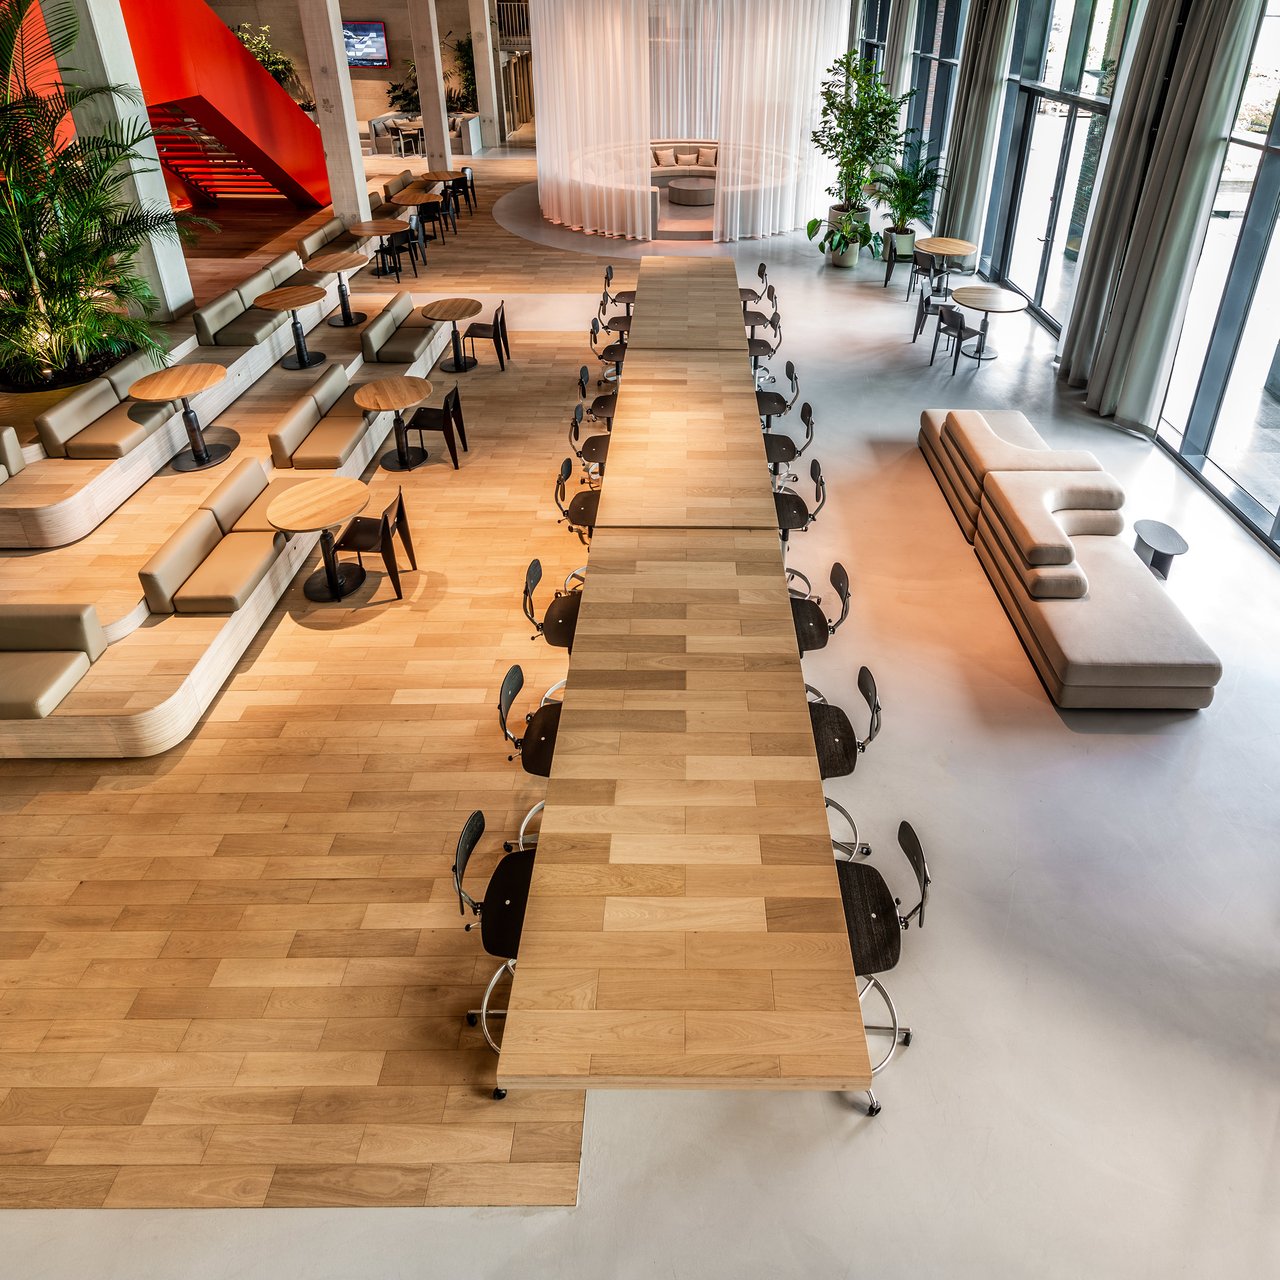 24_ACE_Meetingtable_ConversationPit_Amsterdam_Teo Krijgsman_office interior design_TANK_Tommy Kleerekoper_Sanne Schenk (1).jpg